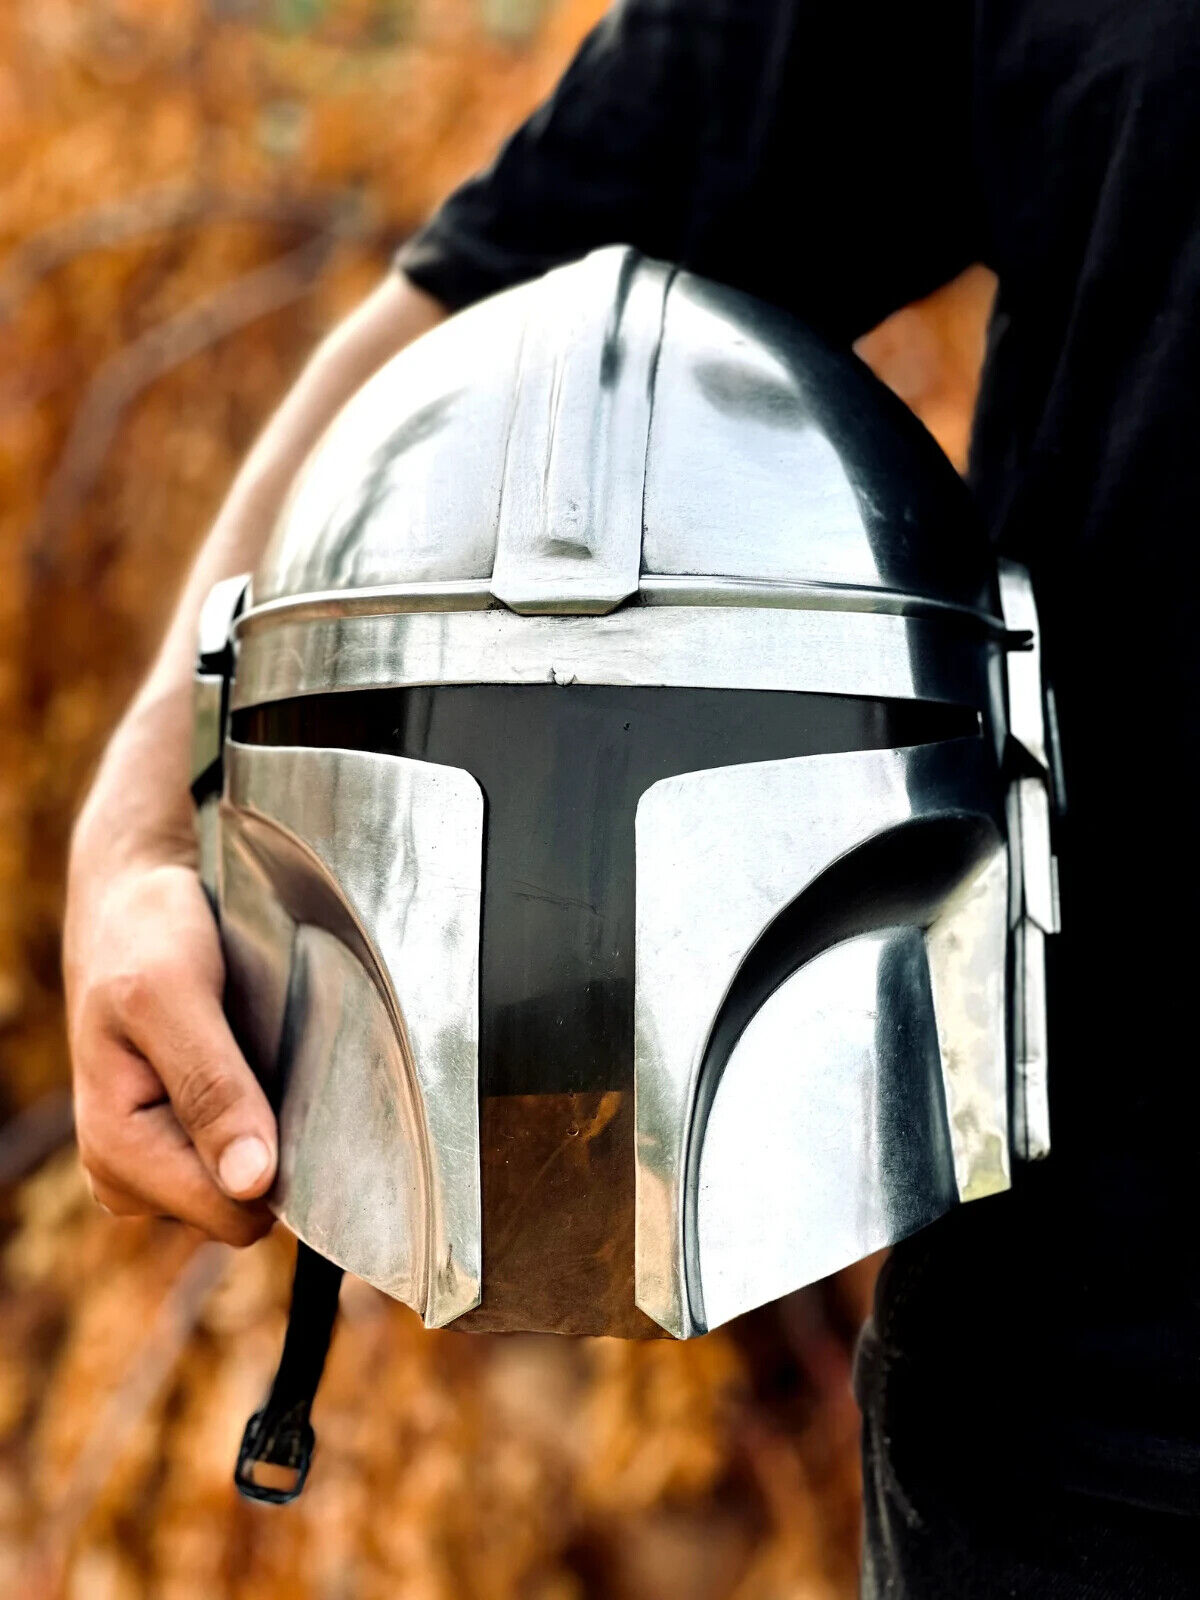 The Mandalorian Steel Helmet With Liner and Chin Strap | Star Wars Helmet